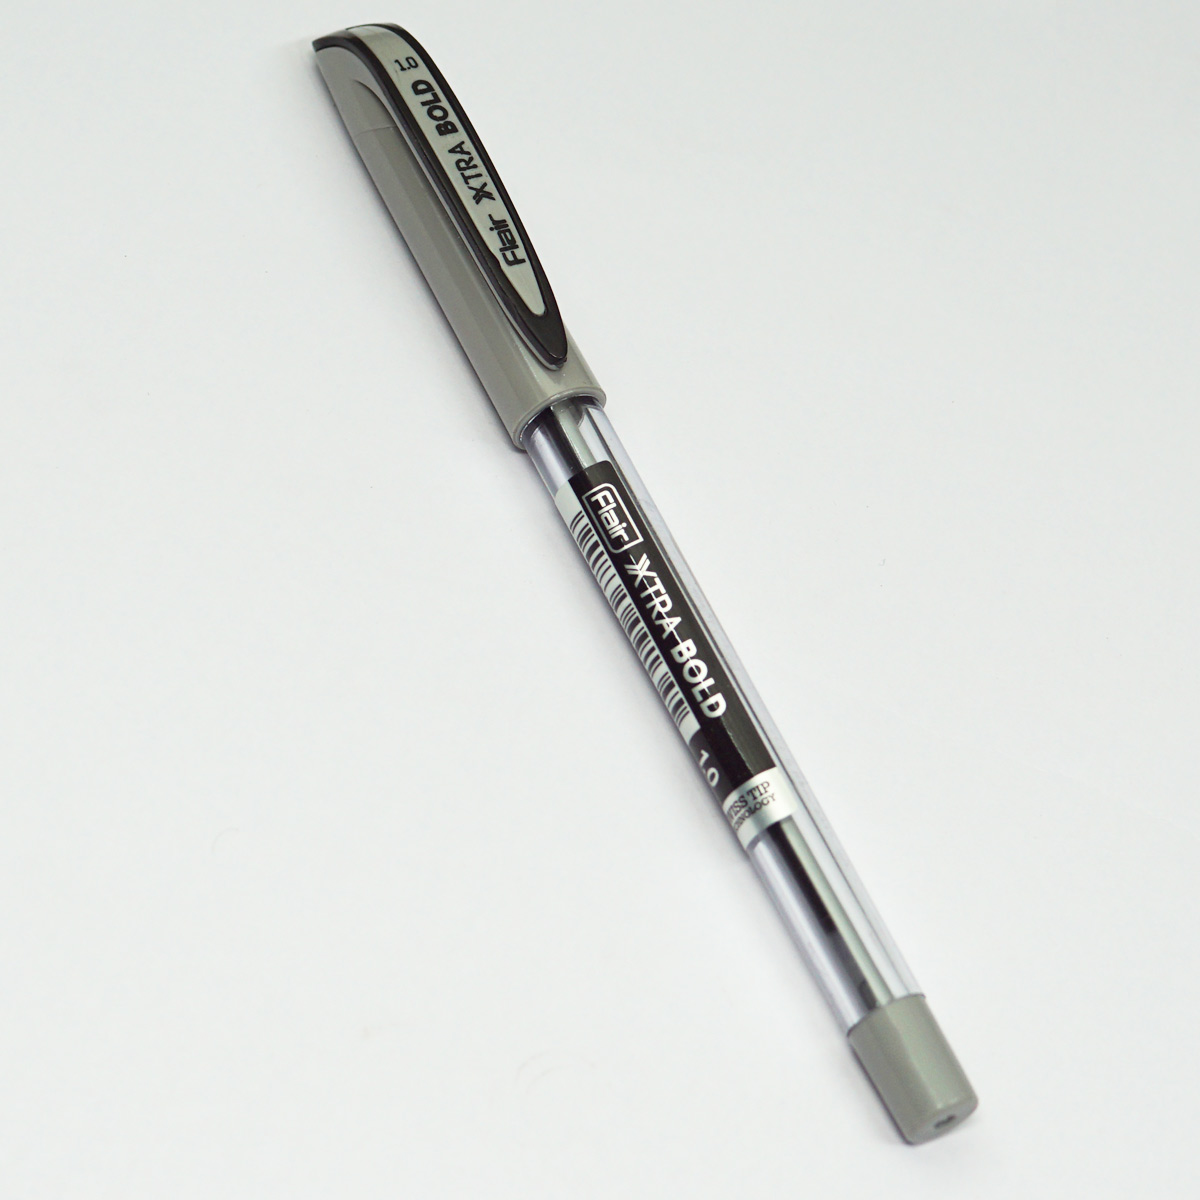 Flair XTRA BOLD Trasparent Body With Grey Color Cap 1.0mm Tip Black Writing Cap Type Ball Pen SKU 23045